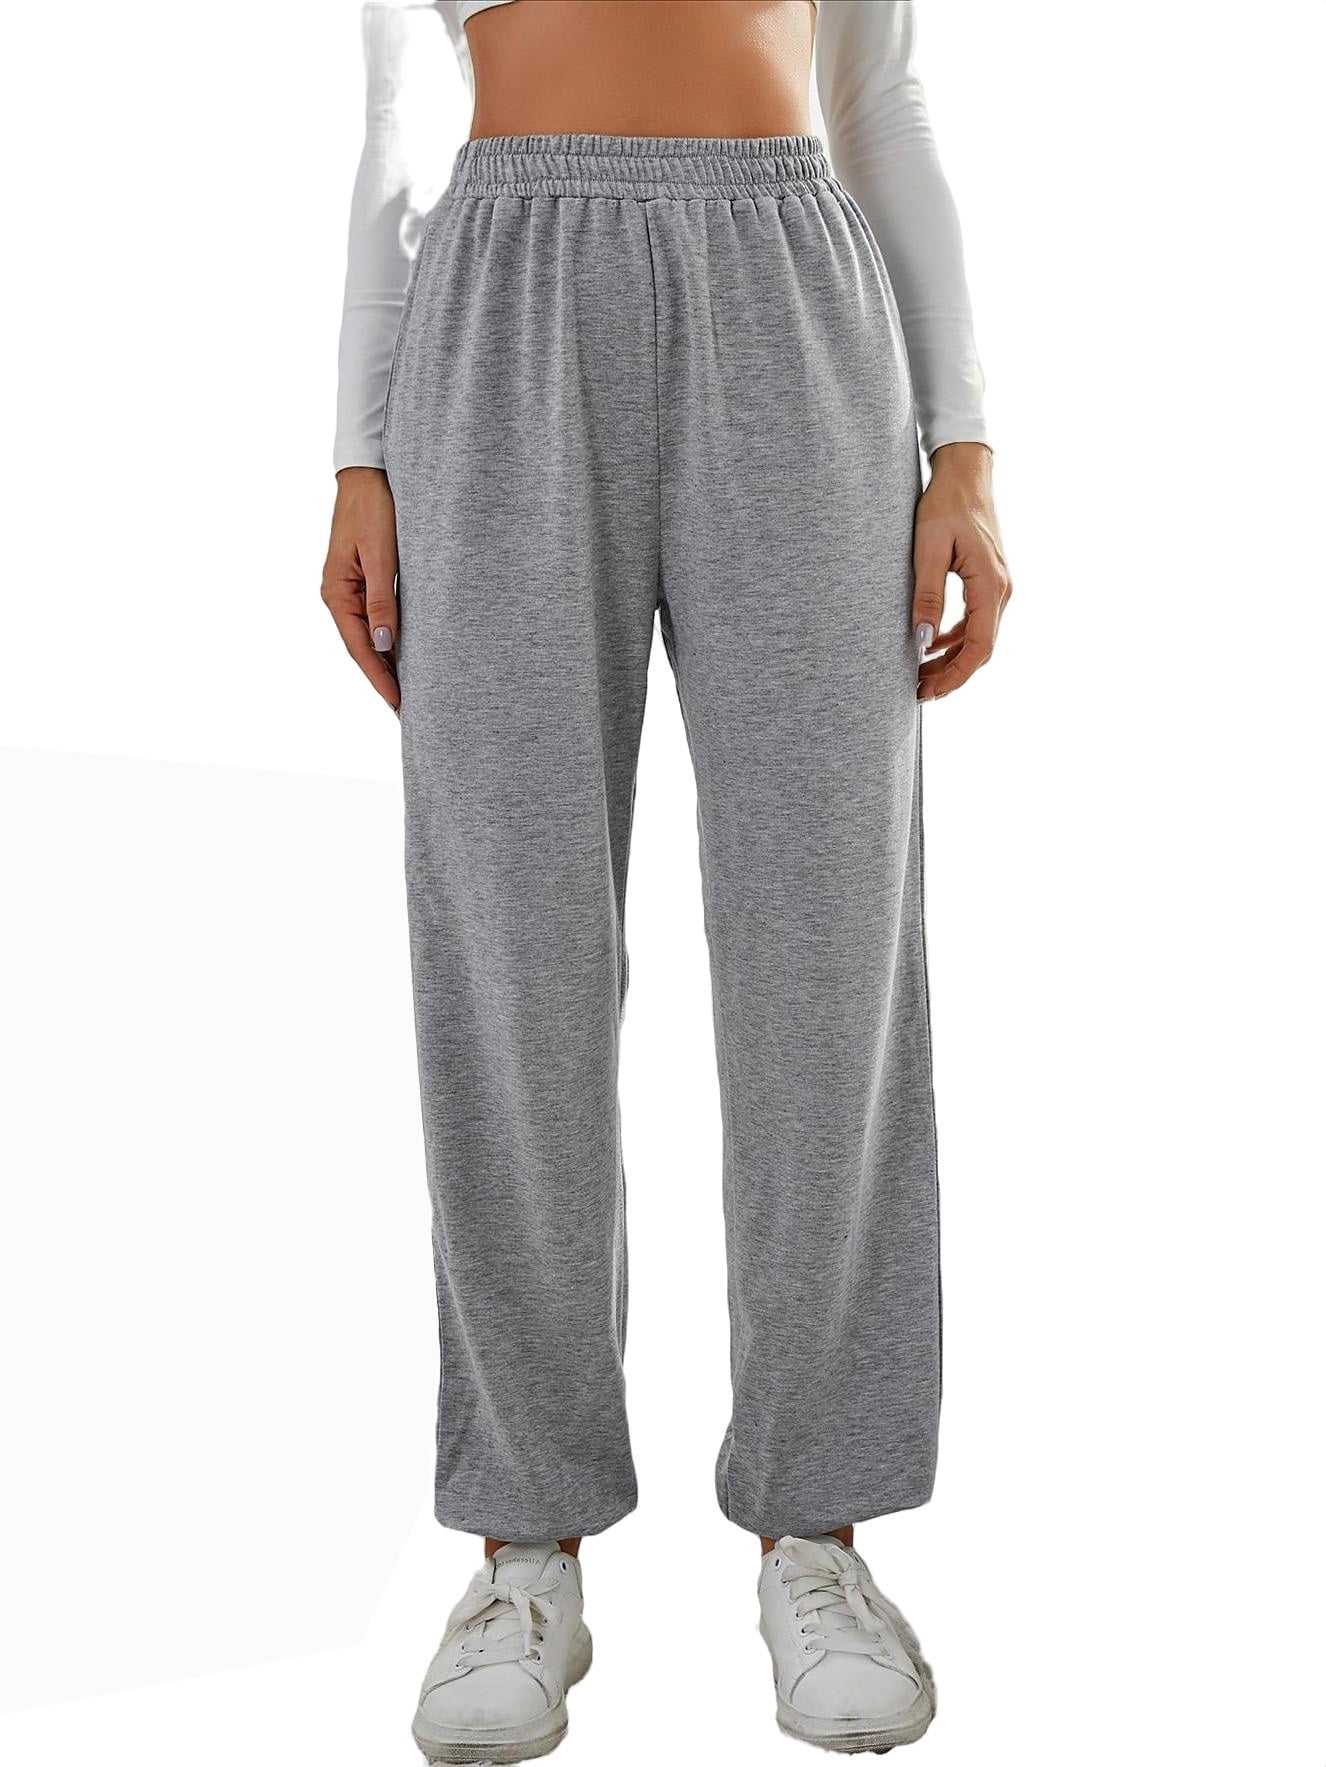 Womens Casual Pants Elastic Waist Solid Sweatpants Grey XS 